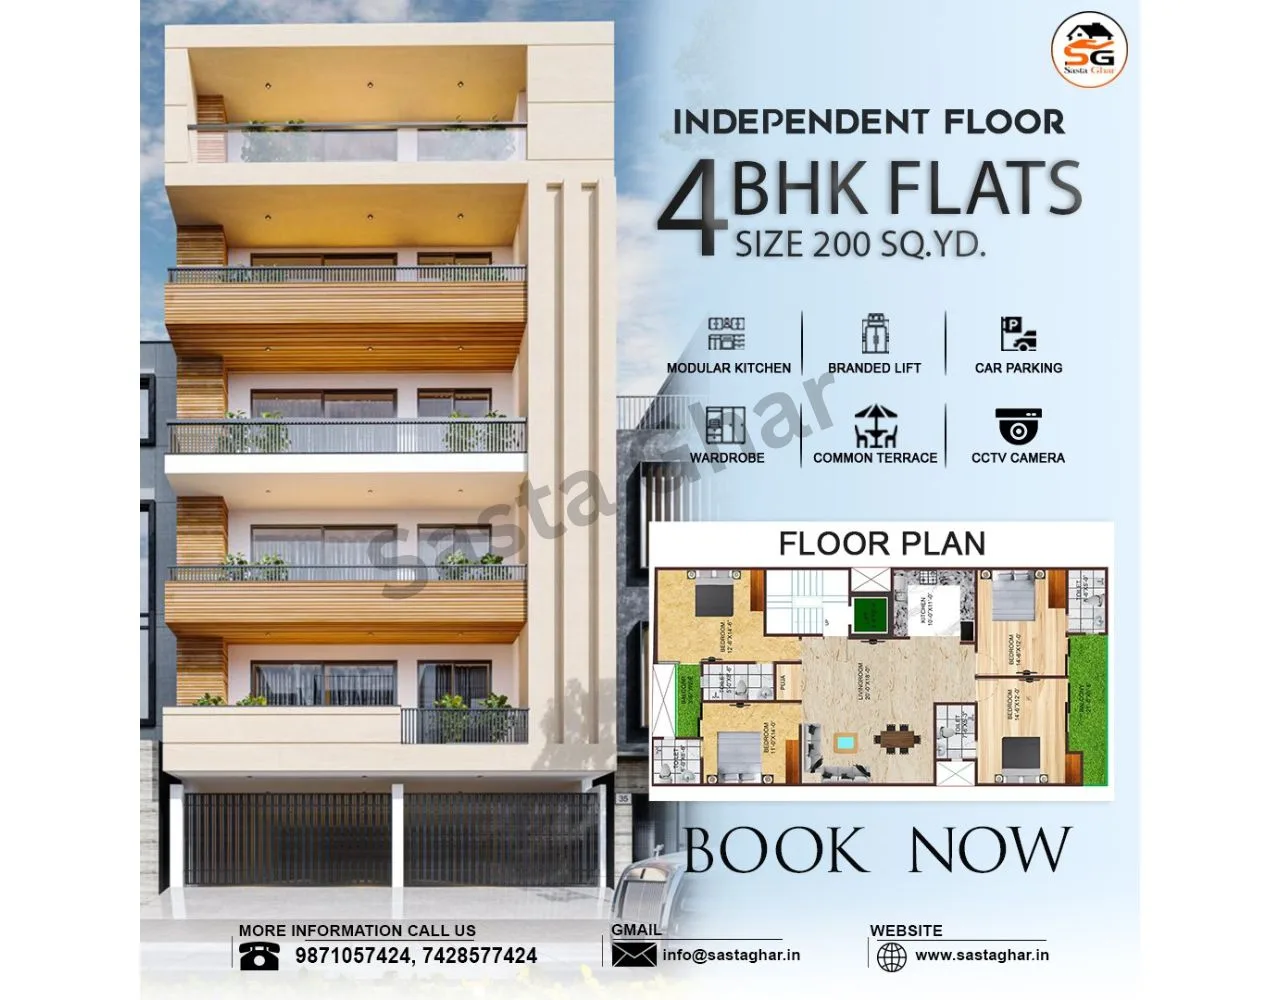 Benefits of buying Independent floors